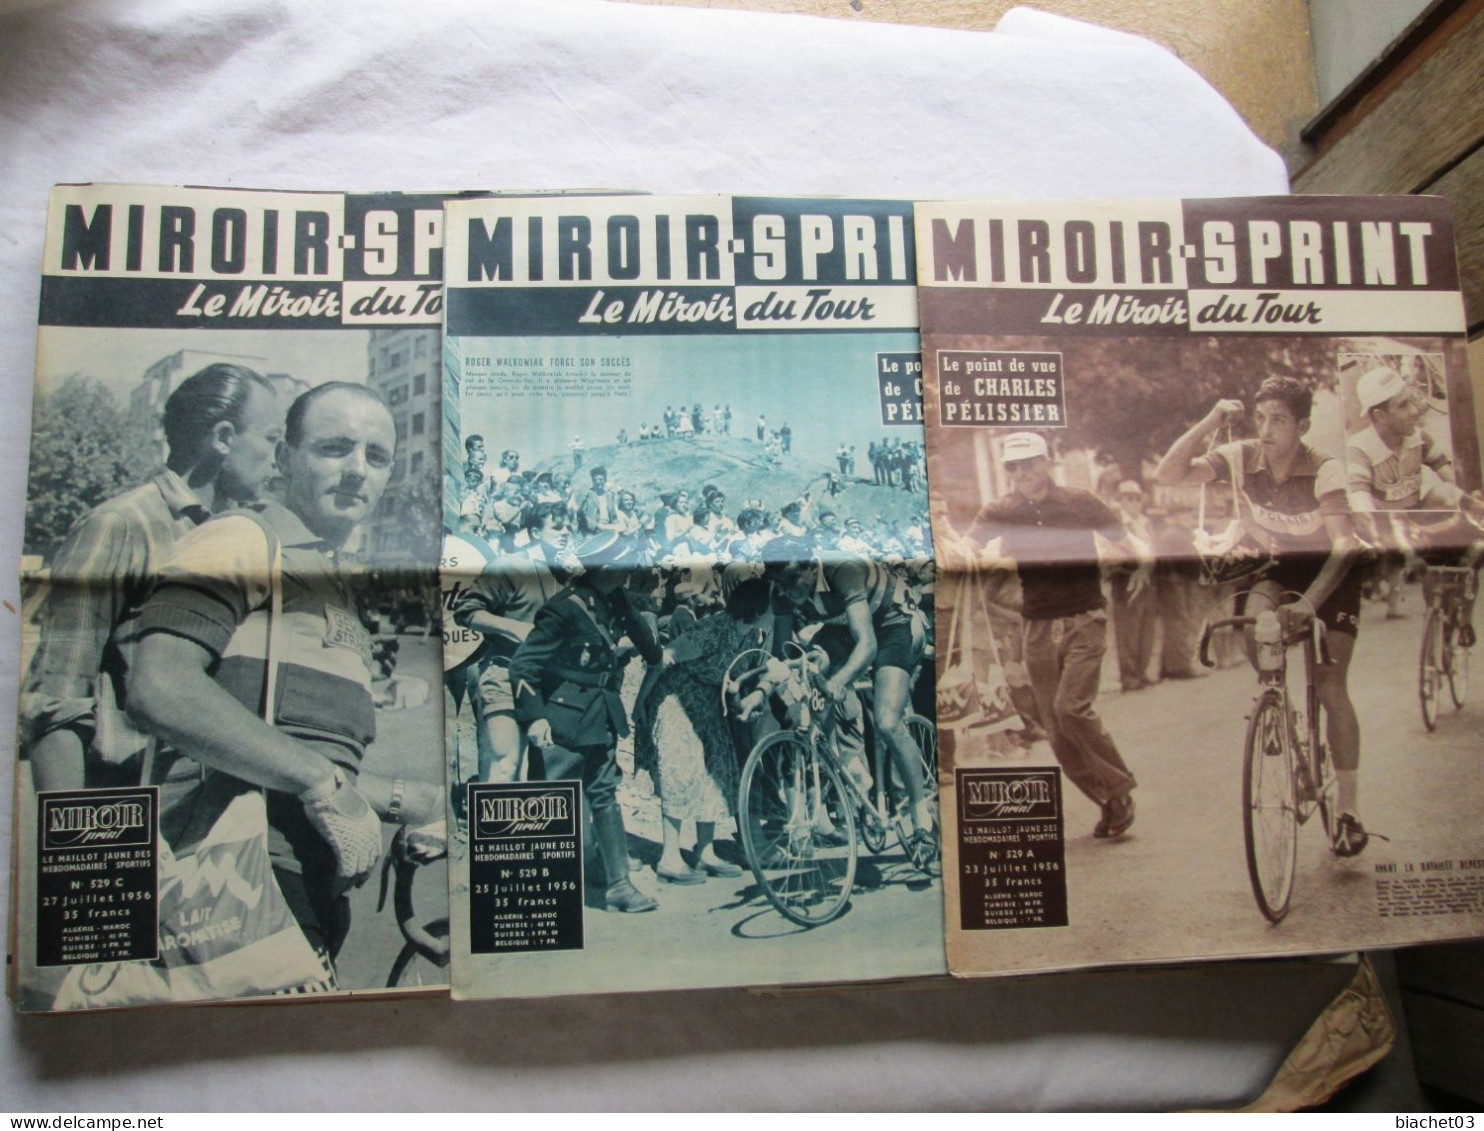 miroir sprint lot de 47 n° de 1956